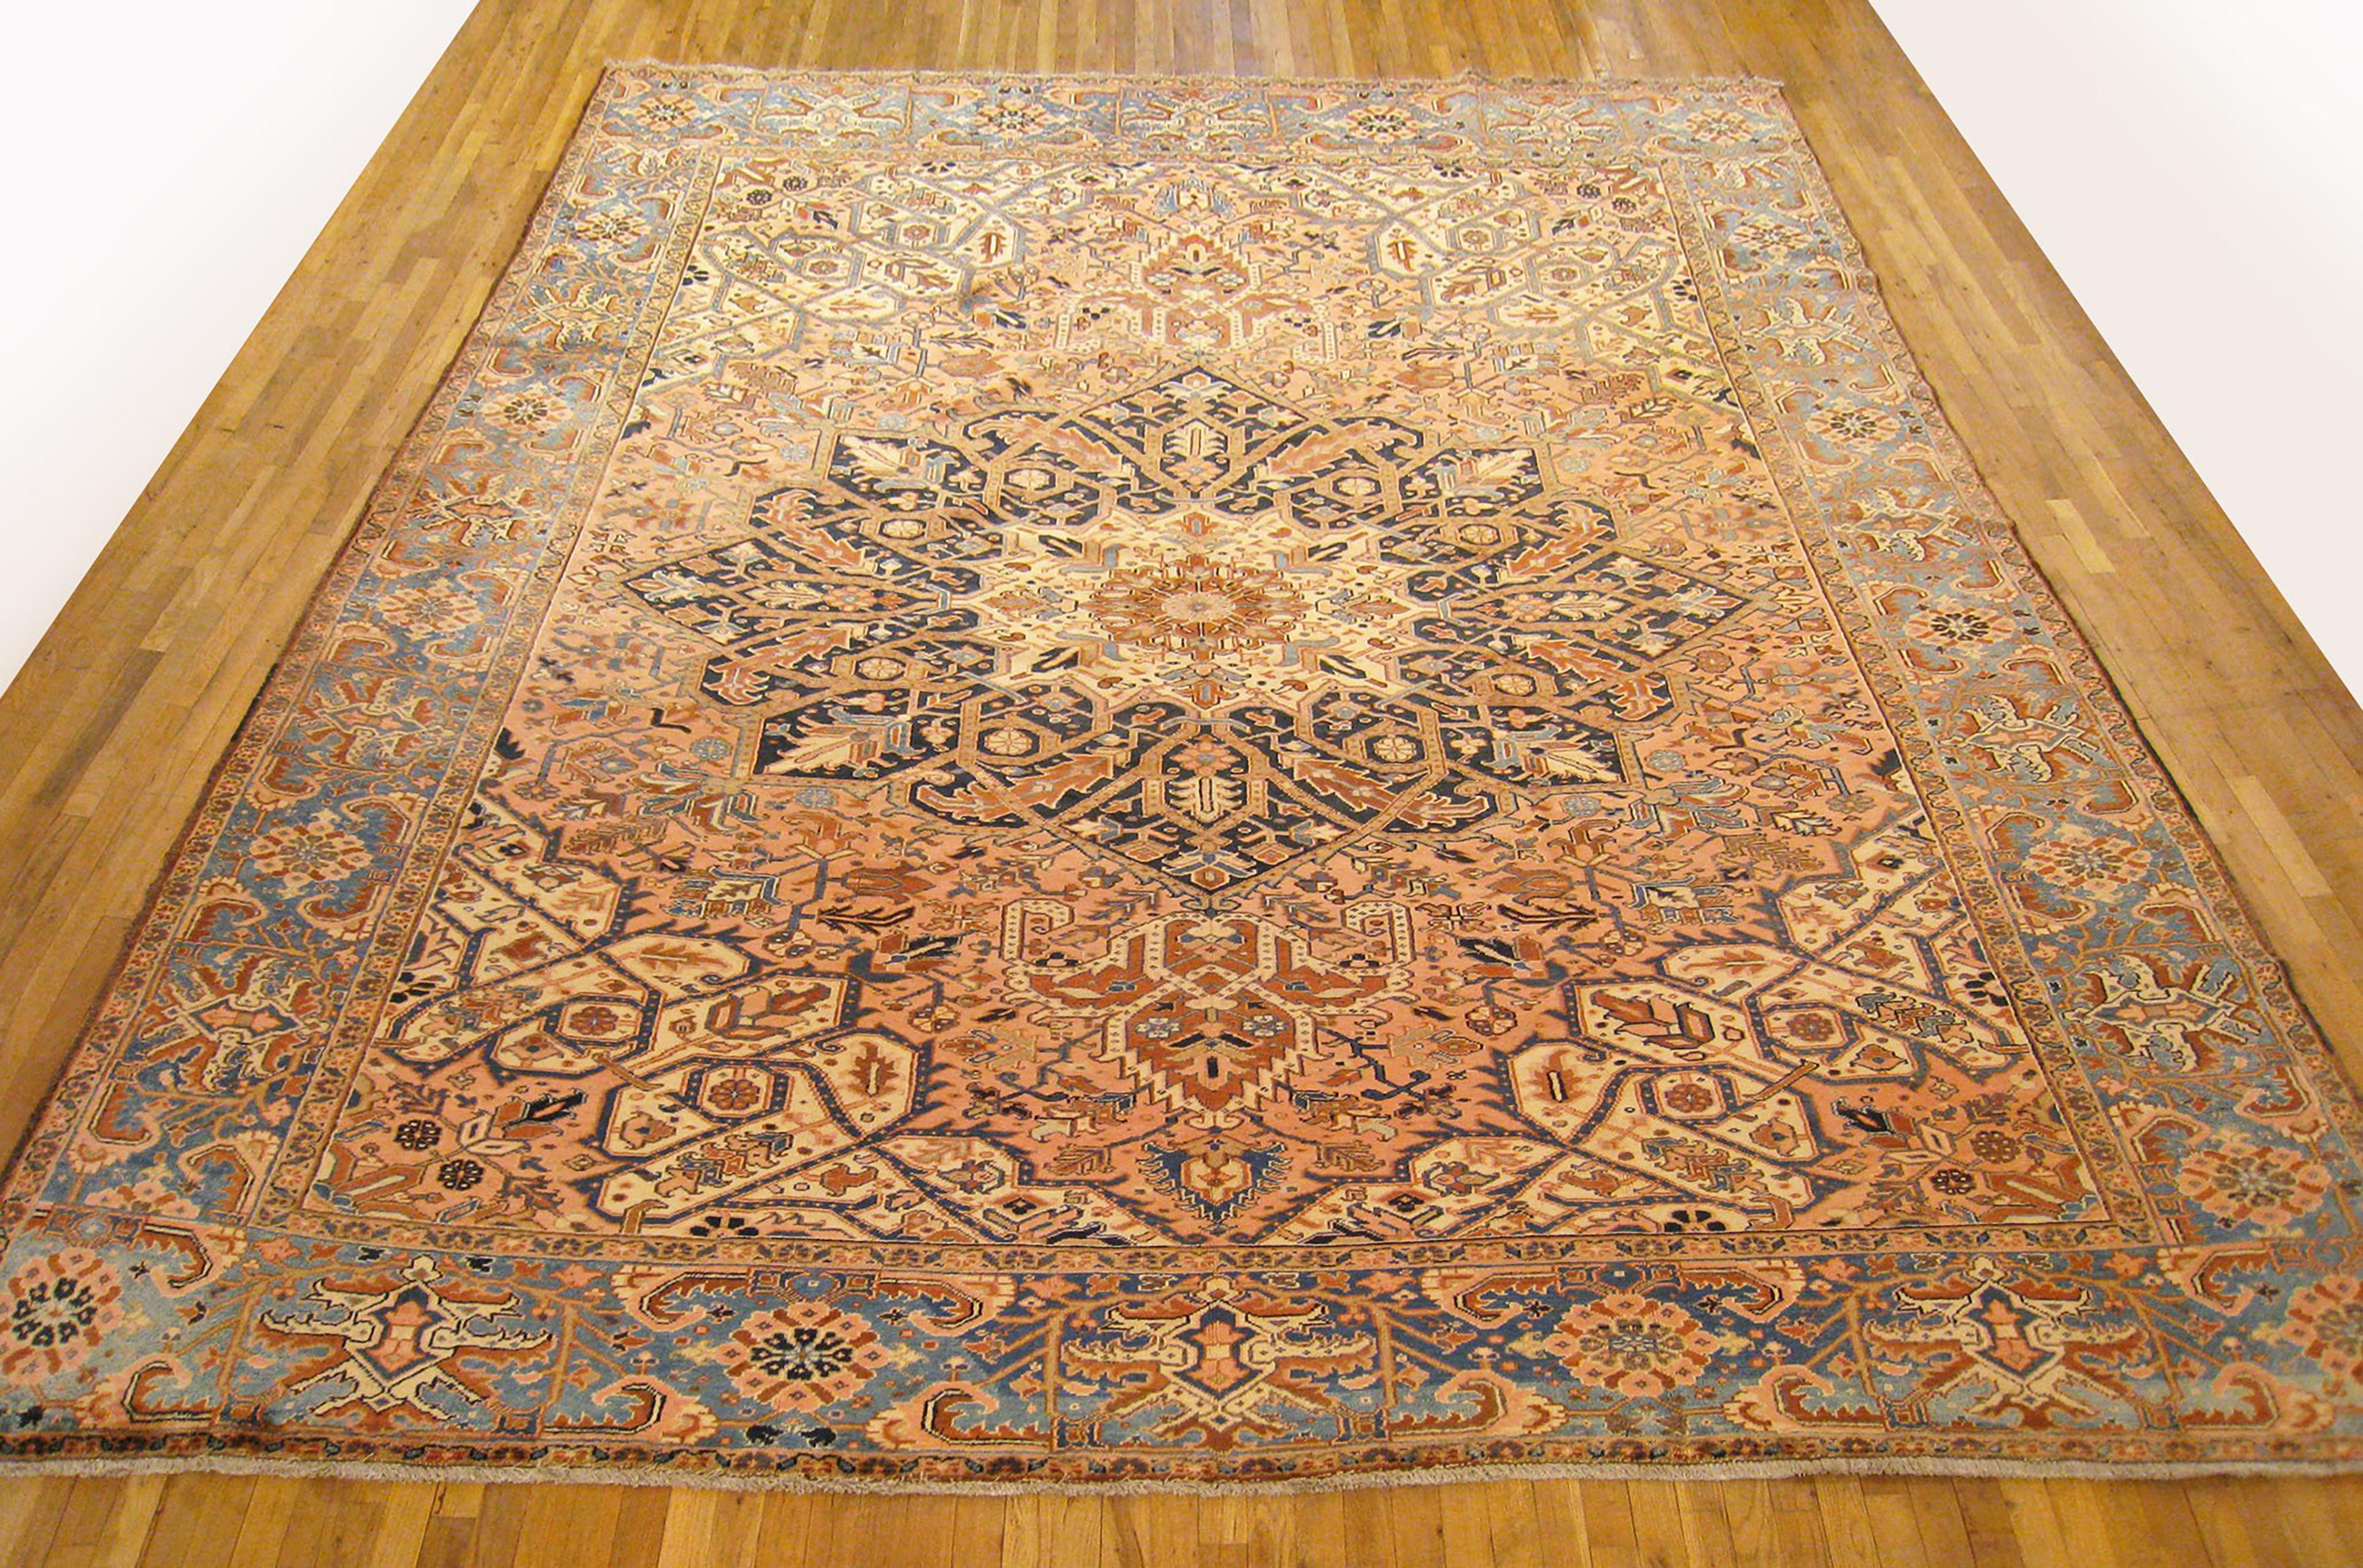 Tapis persan vintage Heriz Oriental, Grande taille.

Un tapis d'orient Persan Heriz vintage, taille 14'8